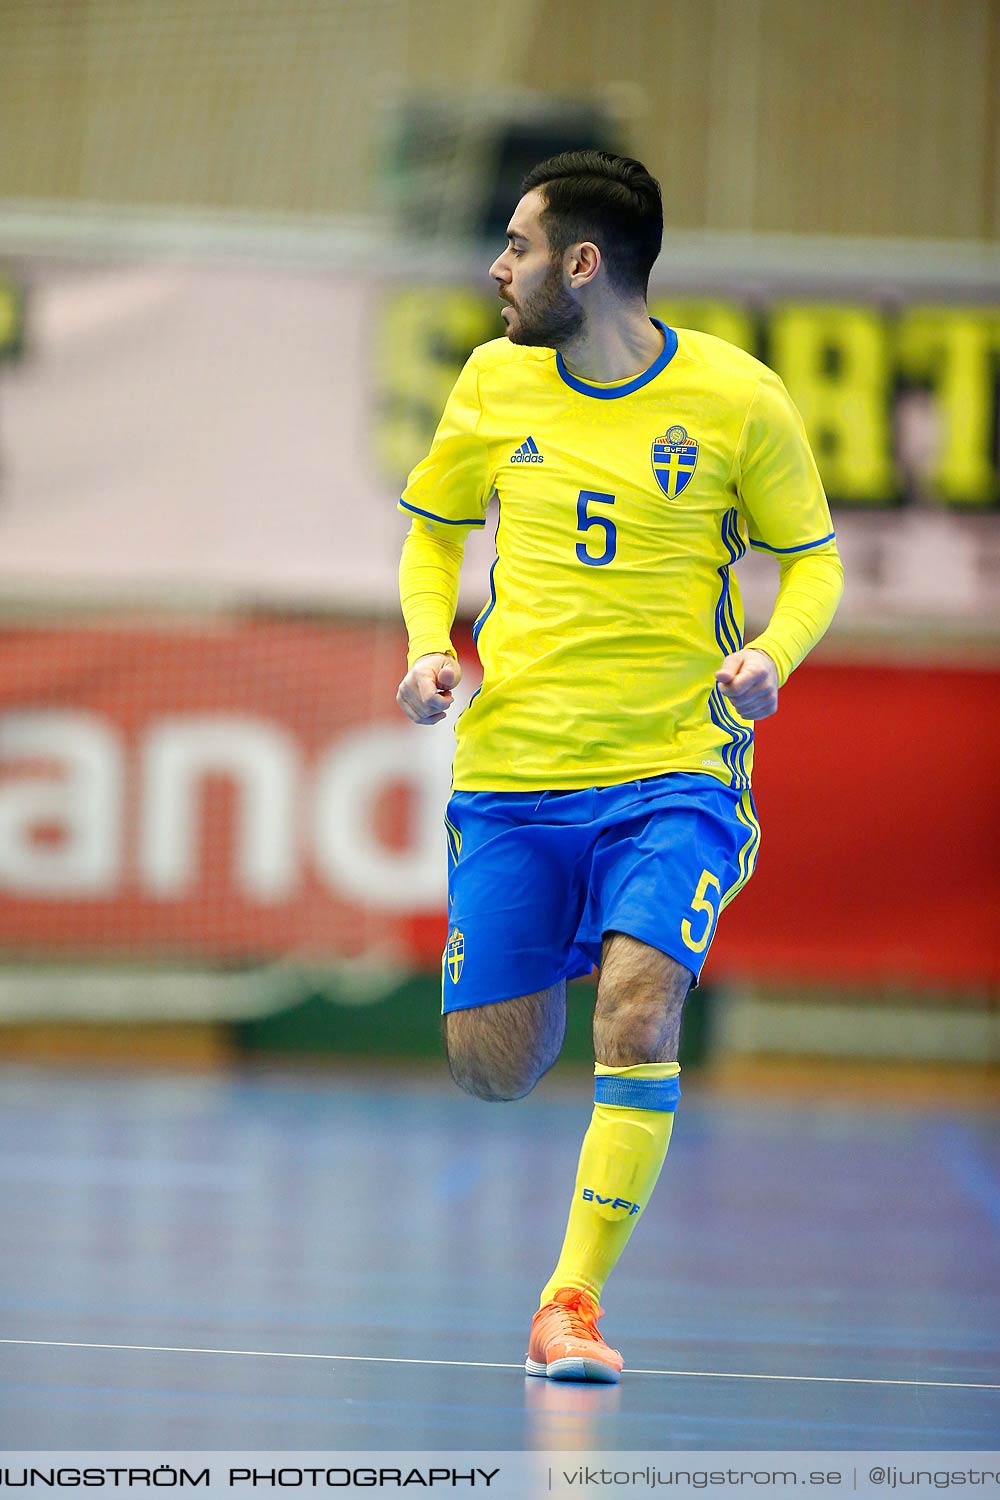 Landskamp Sverige-Finland 3-6,herr,Arena Skövde,Skövde,Sverige,Futsal,,2016,176952